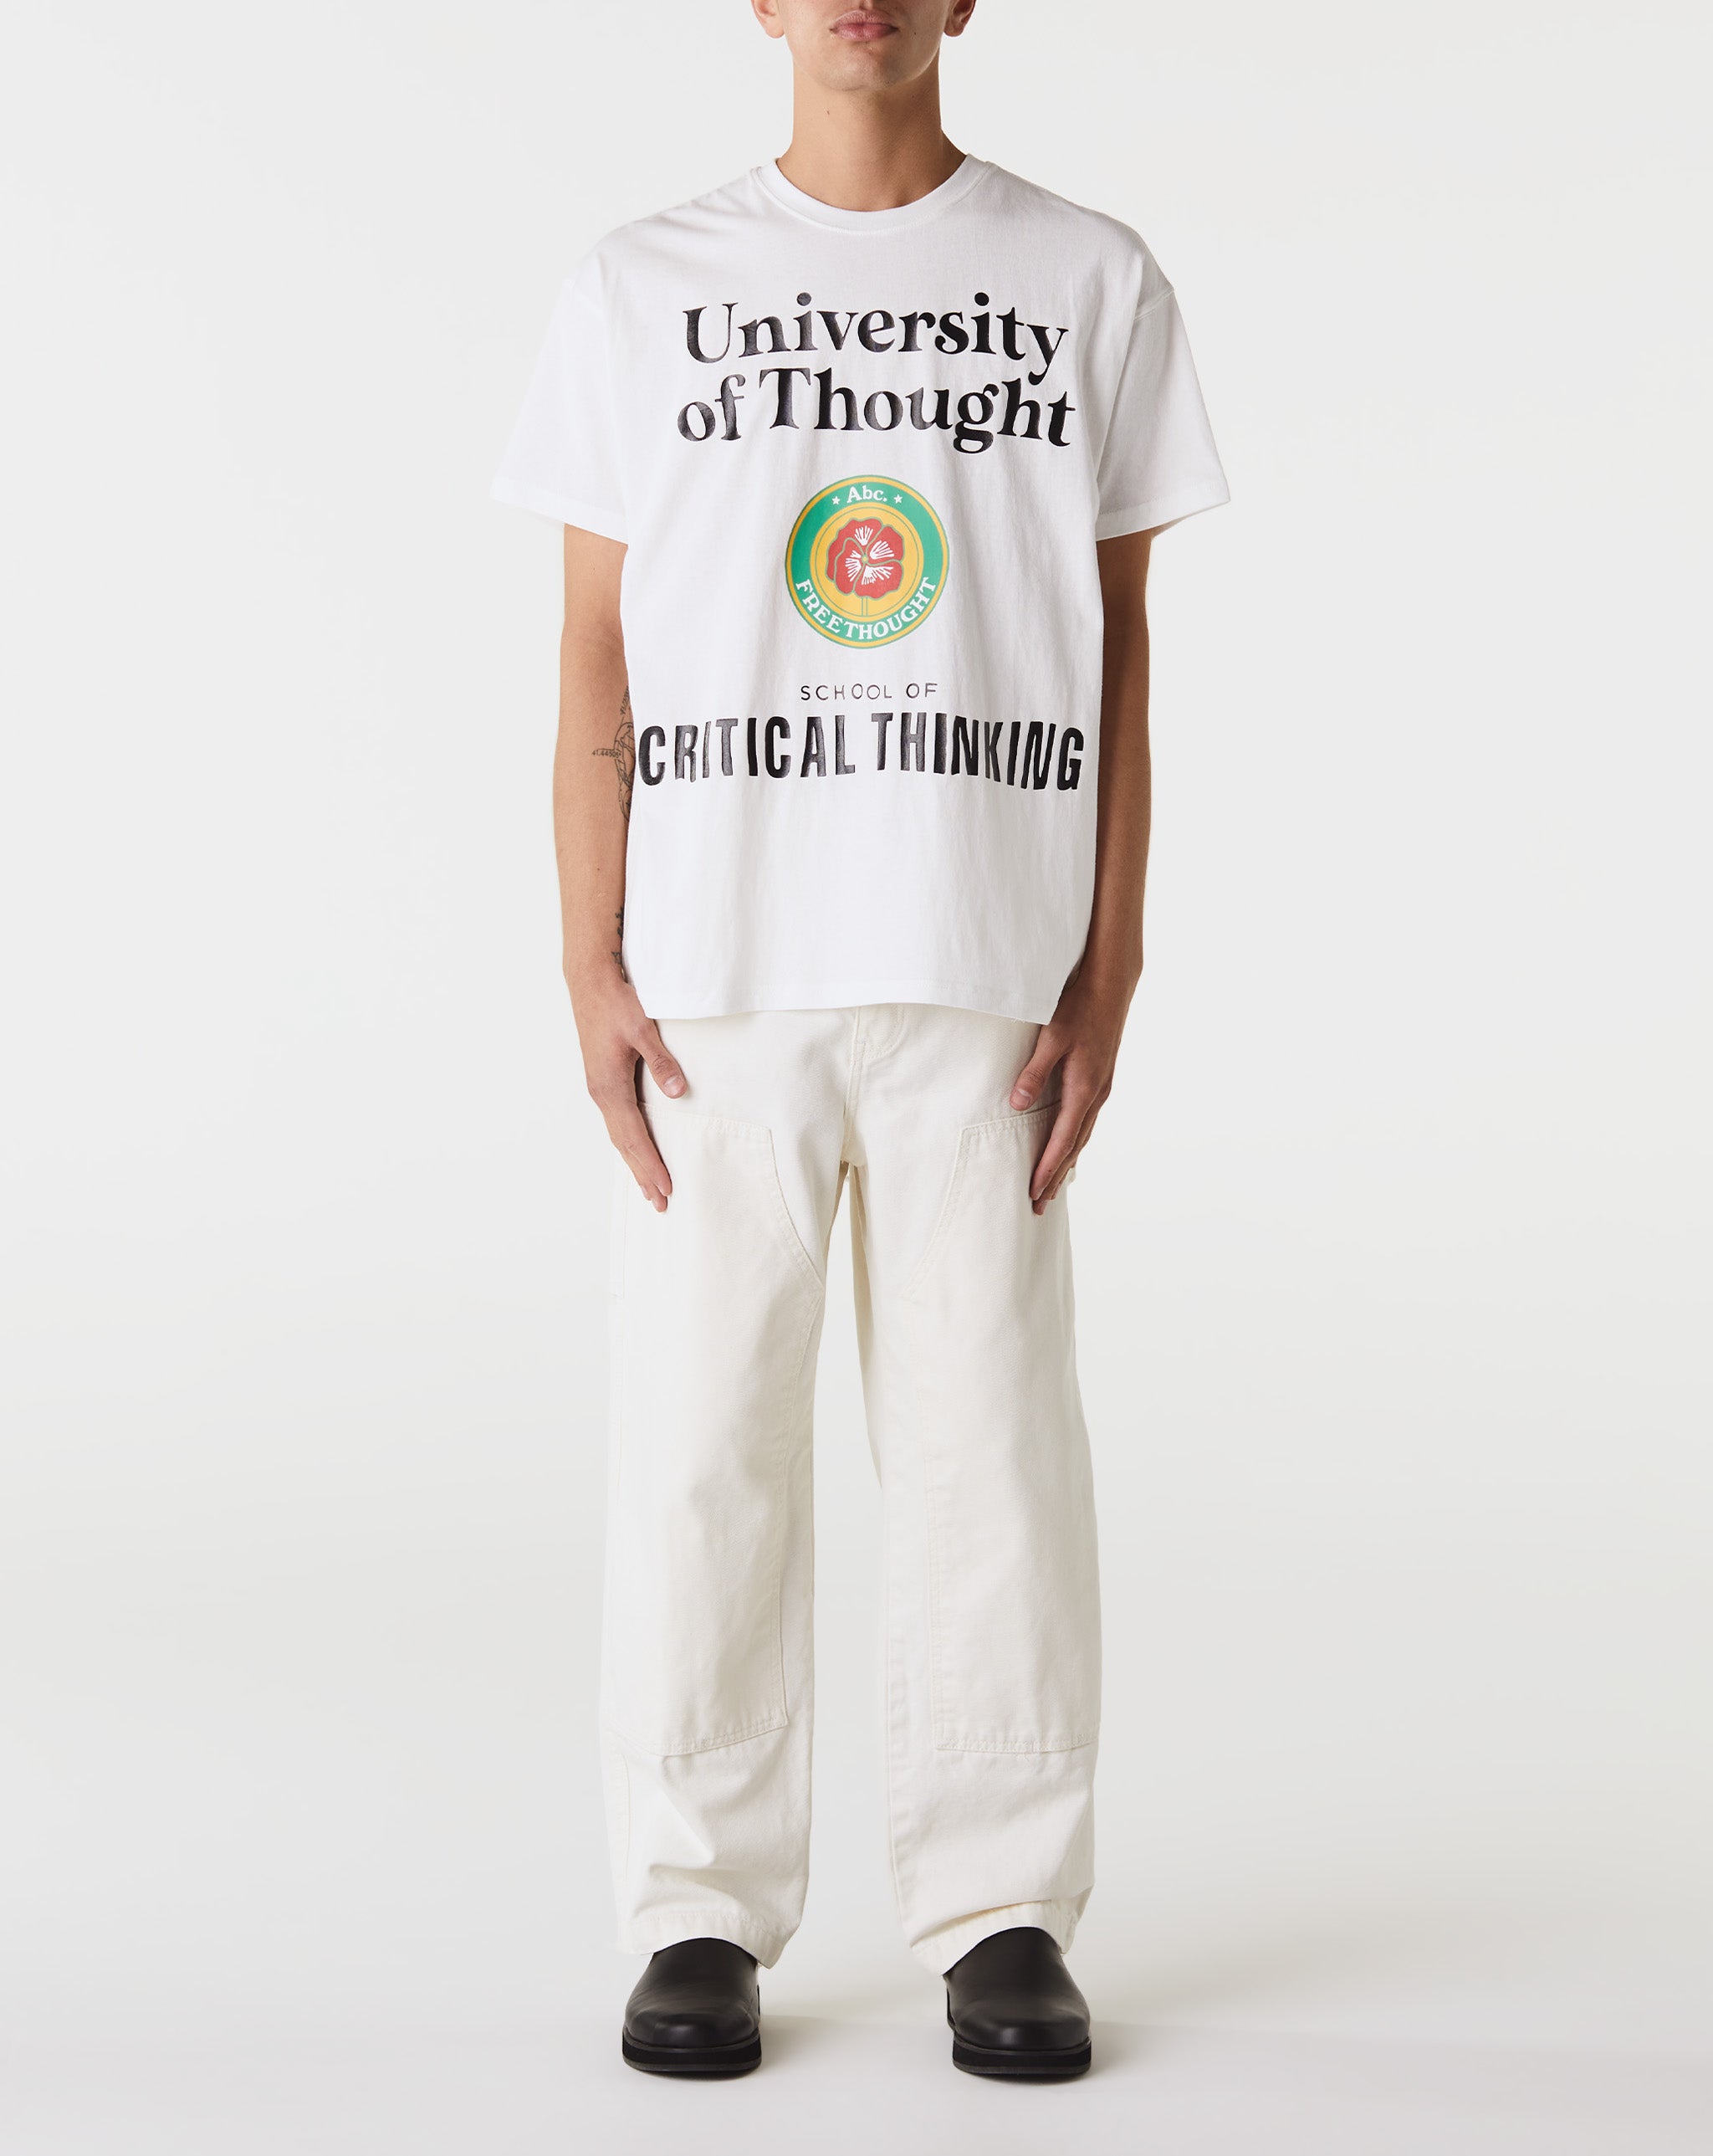 I agree with the University T-Shirt  - Cheap Urlfreeze Jordan outlet